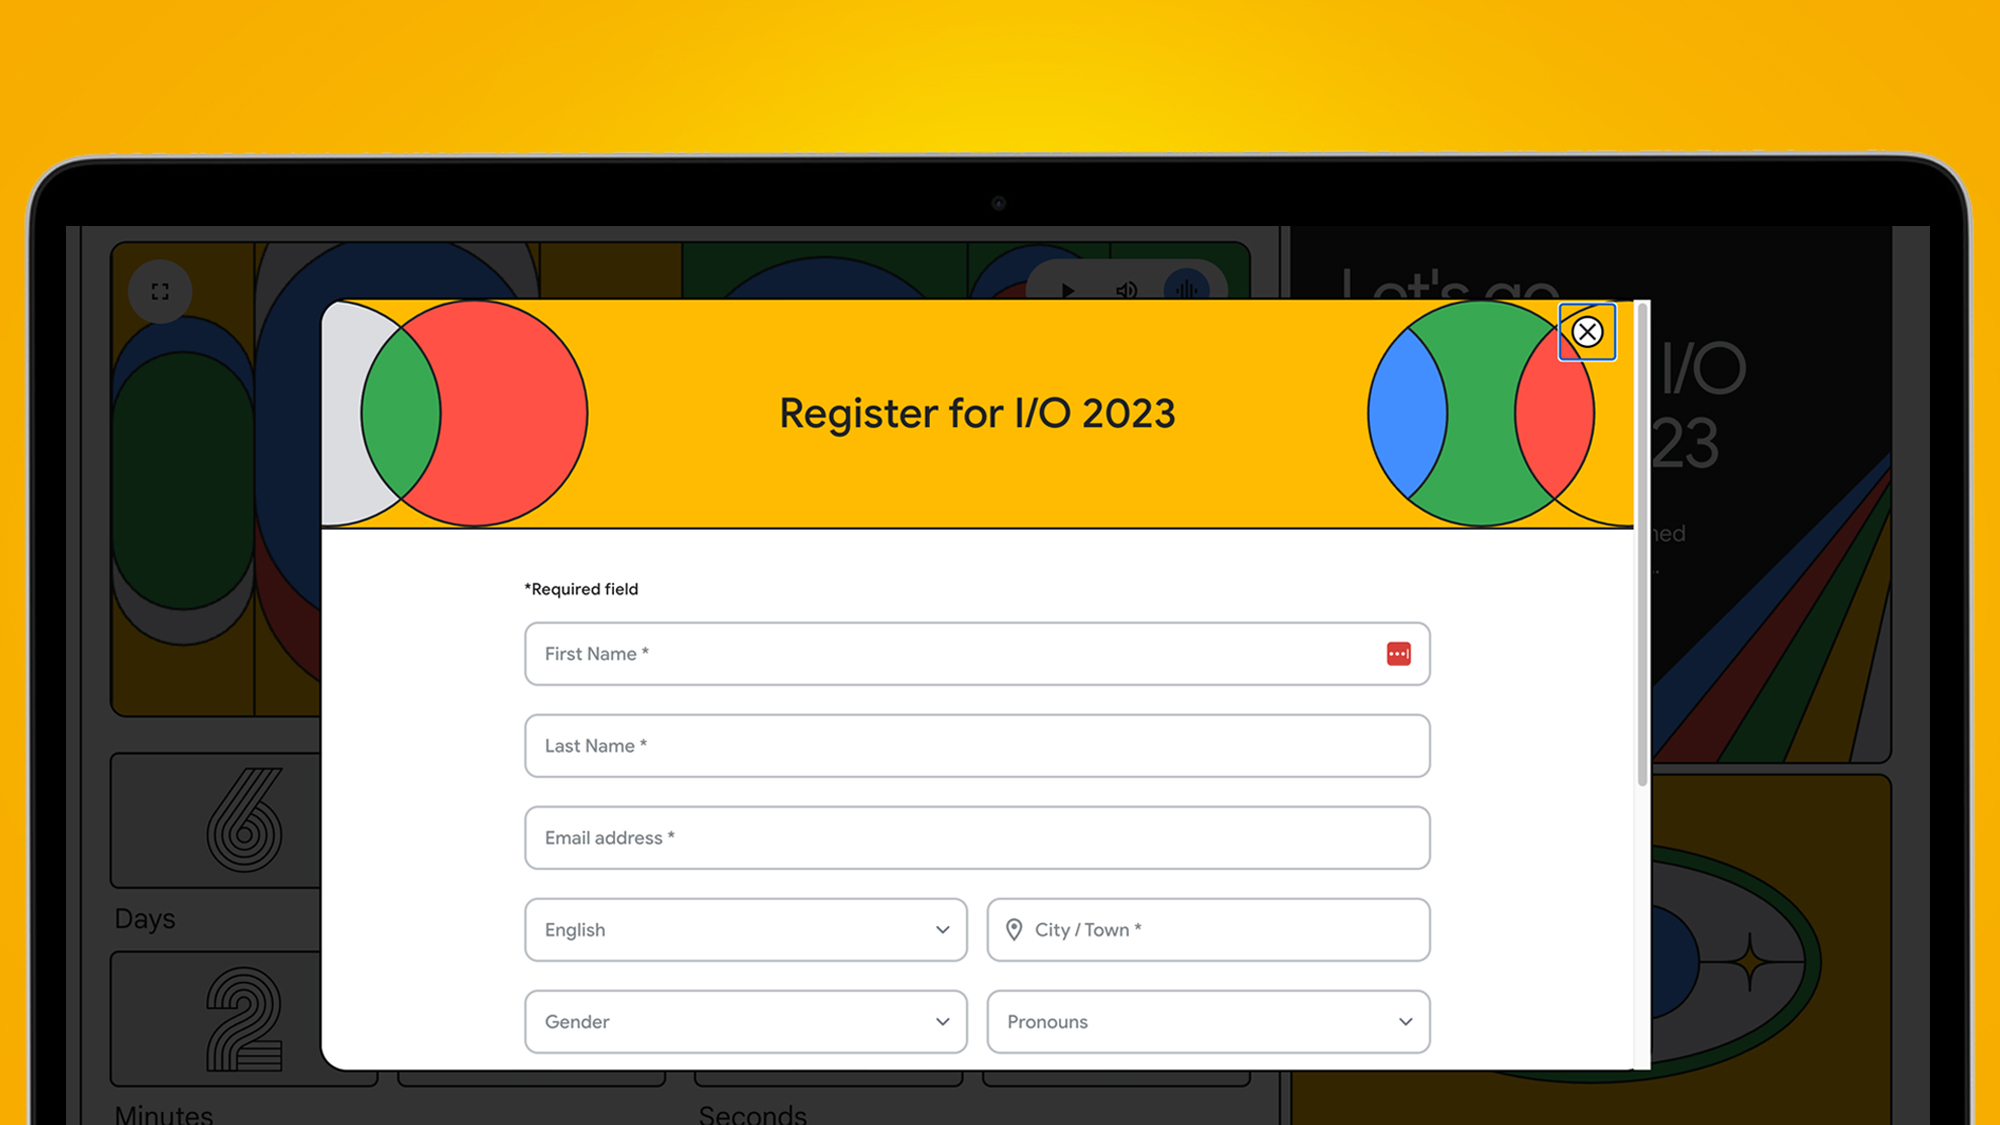 Laptop screen on orange background showing Google IO 2023 registration page